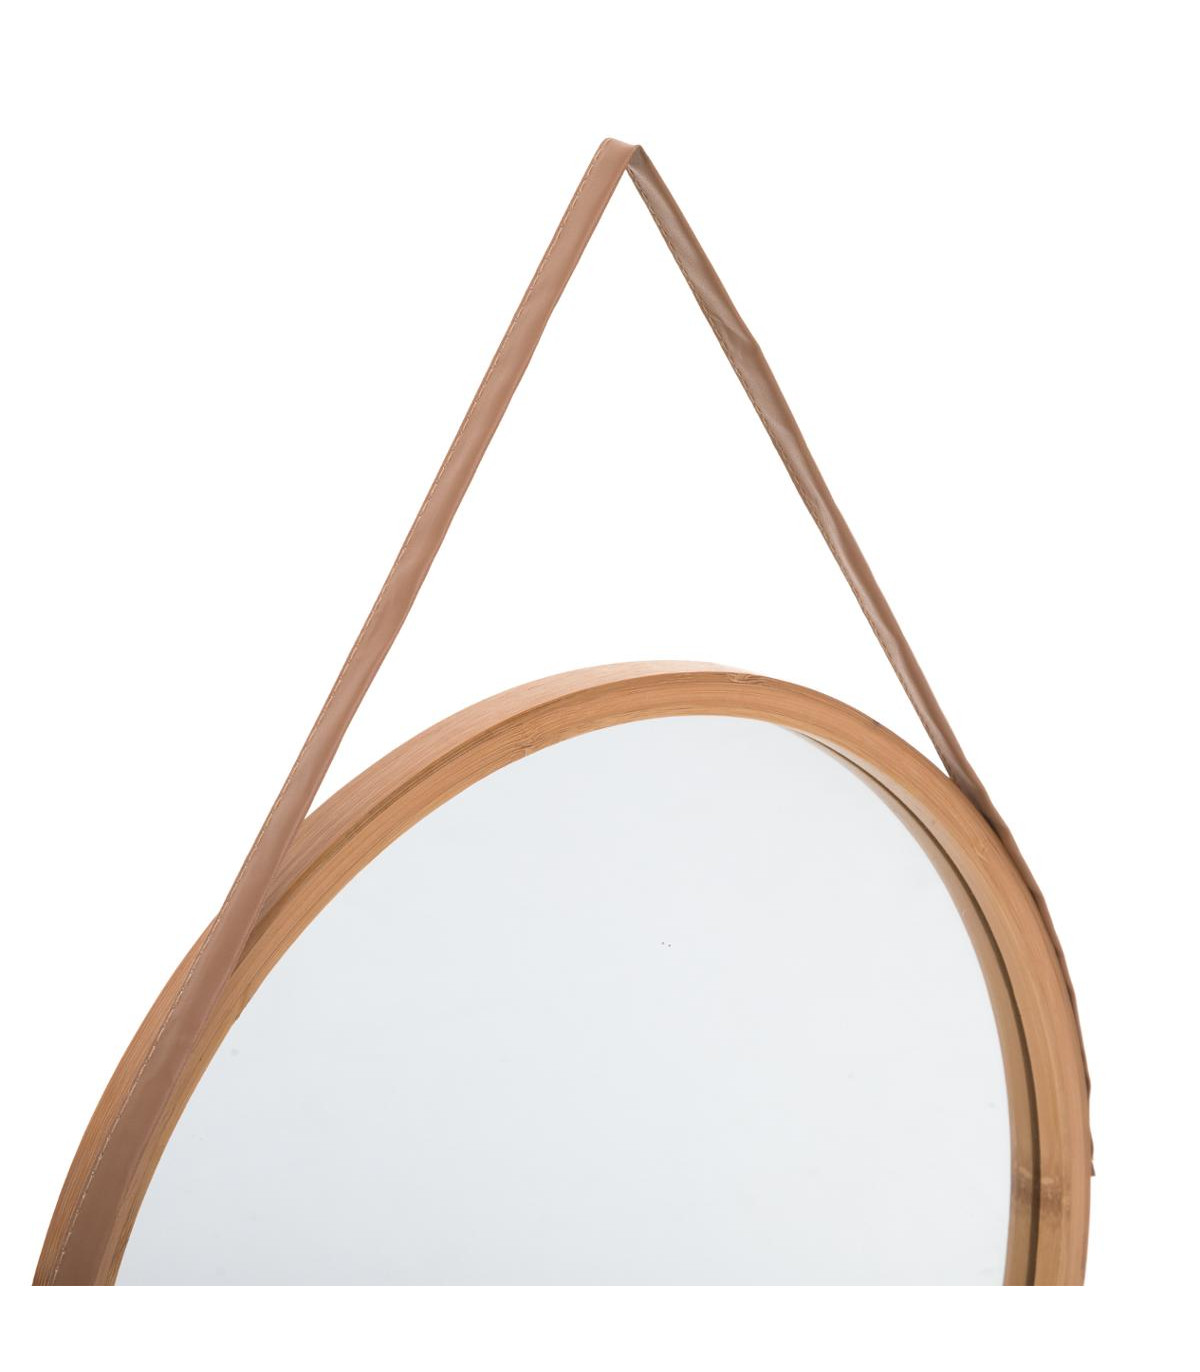 miroir-rond-contour-bambou-d-38-cm-modele-sicela (2)